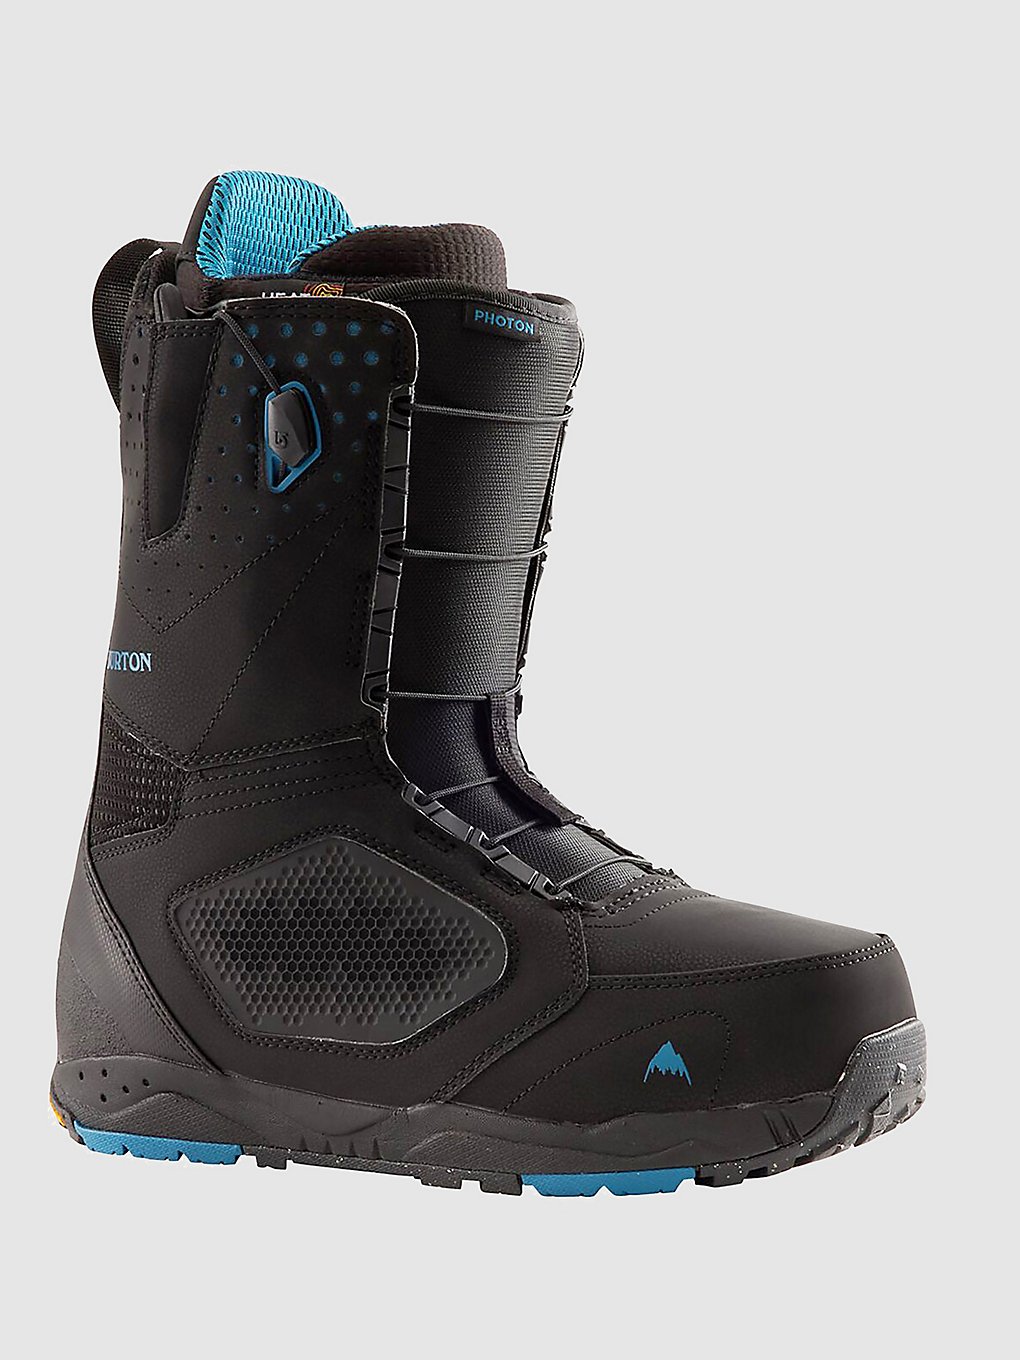 Burton Photon 2024 Snowboard schoenen zwart